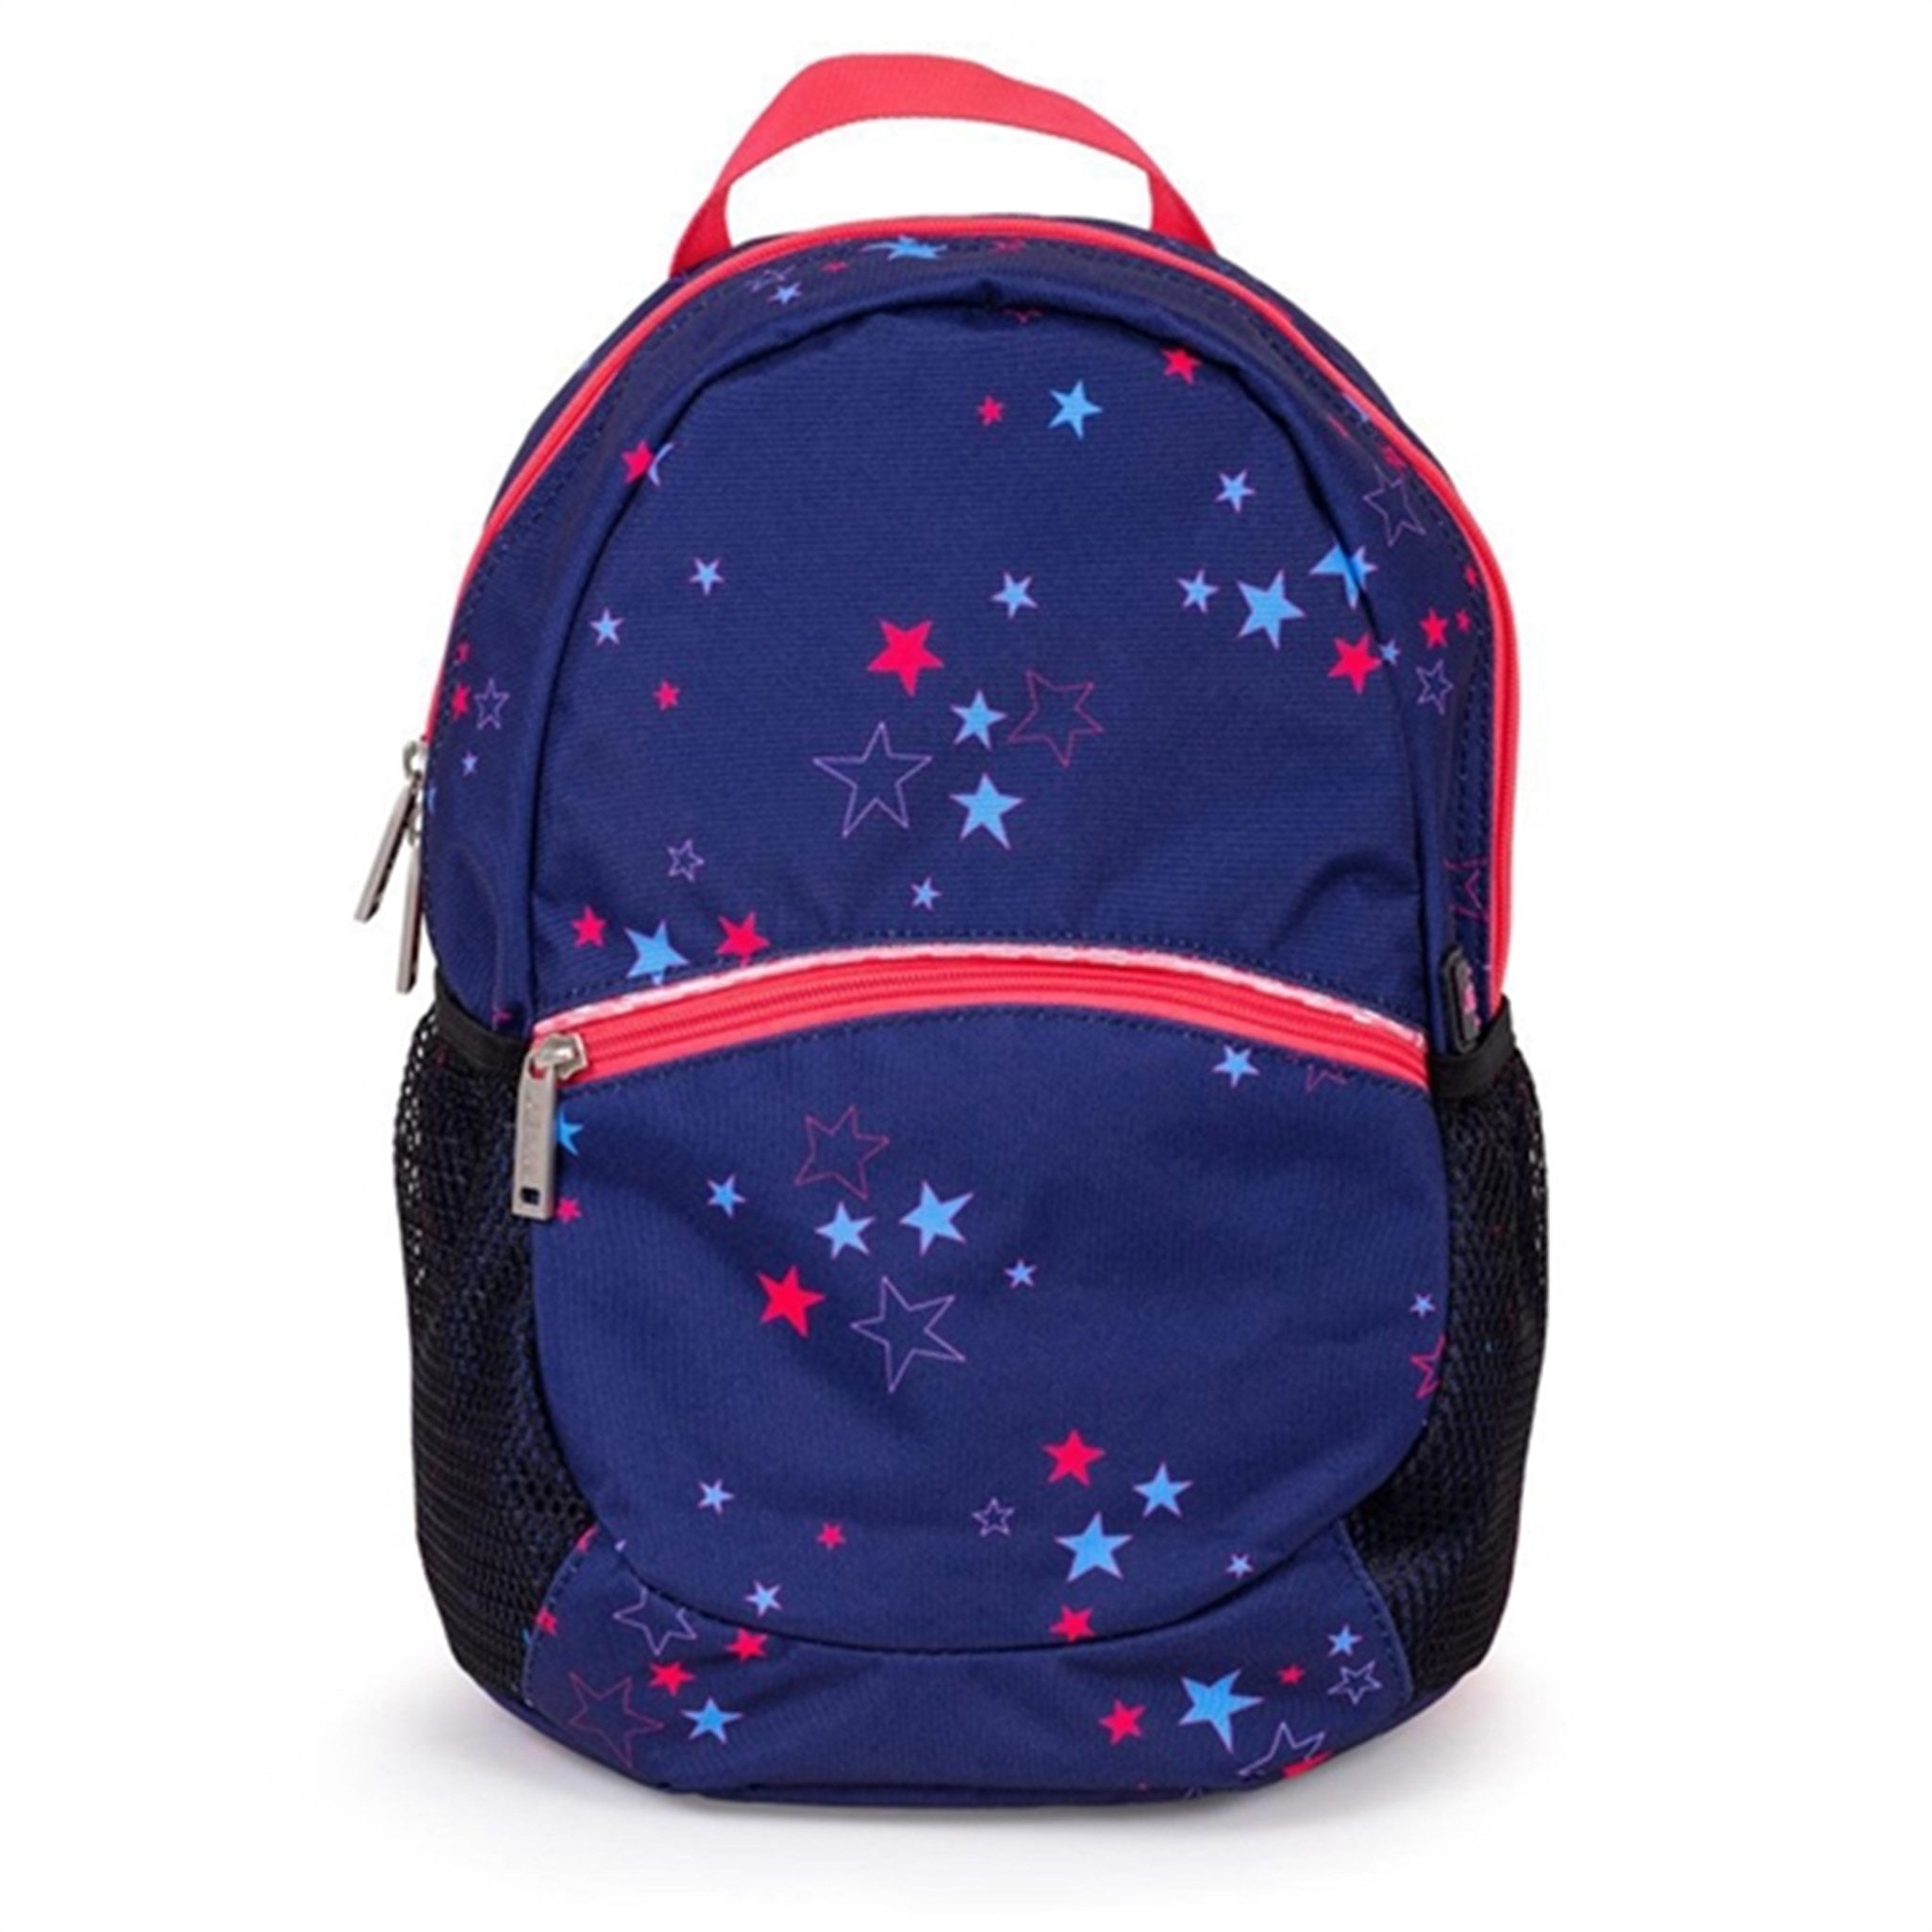 JEVA Backpack Pink Starry